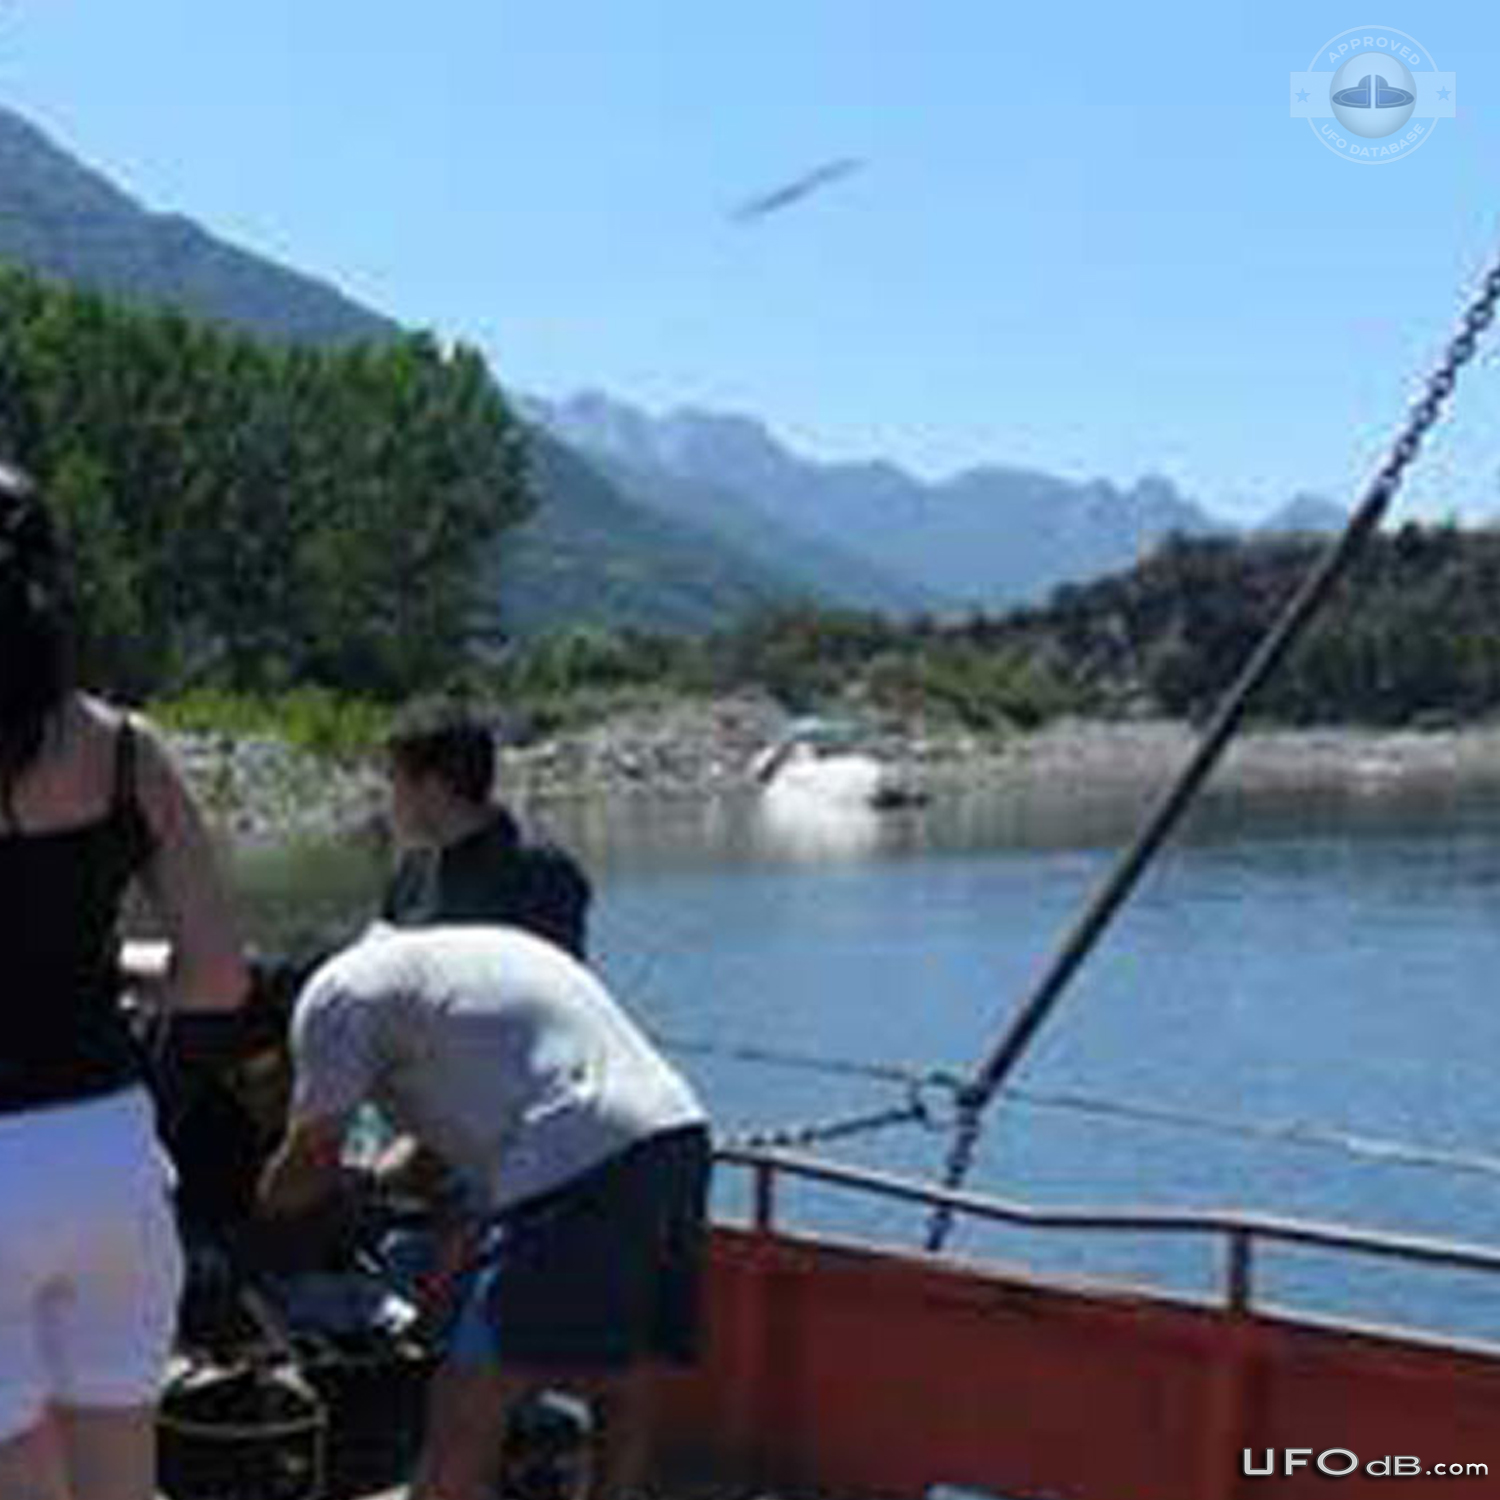 Tourist UFO picture published in Newspaper in San Fabian, Chile | 2011 UFO Picture #262-3